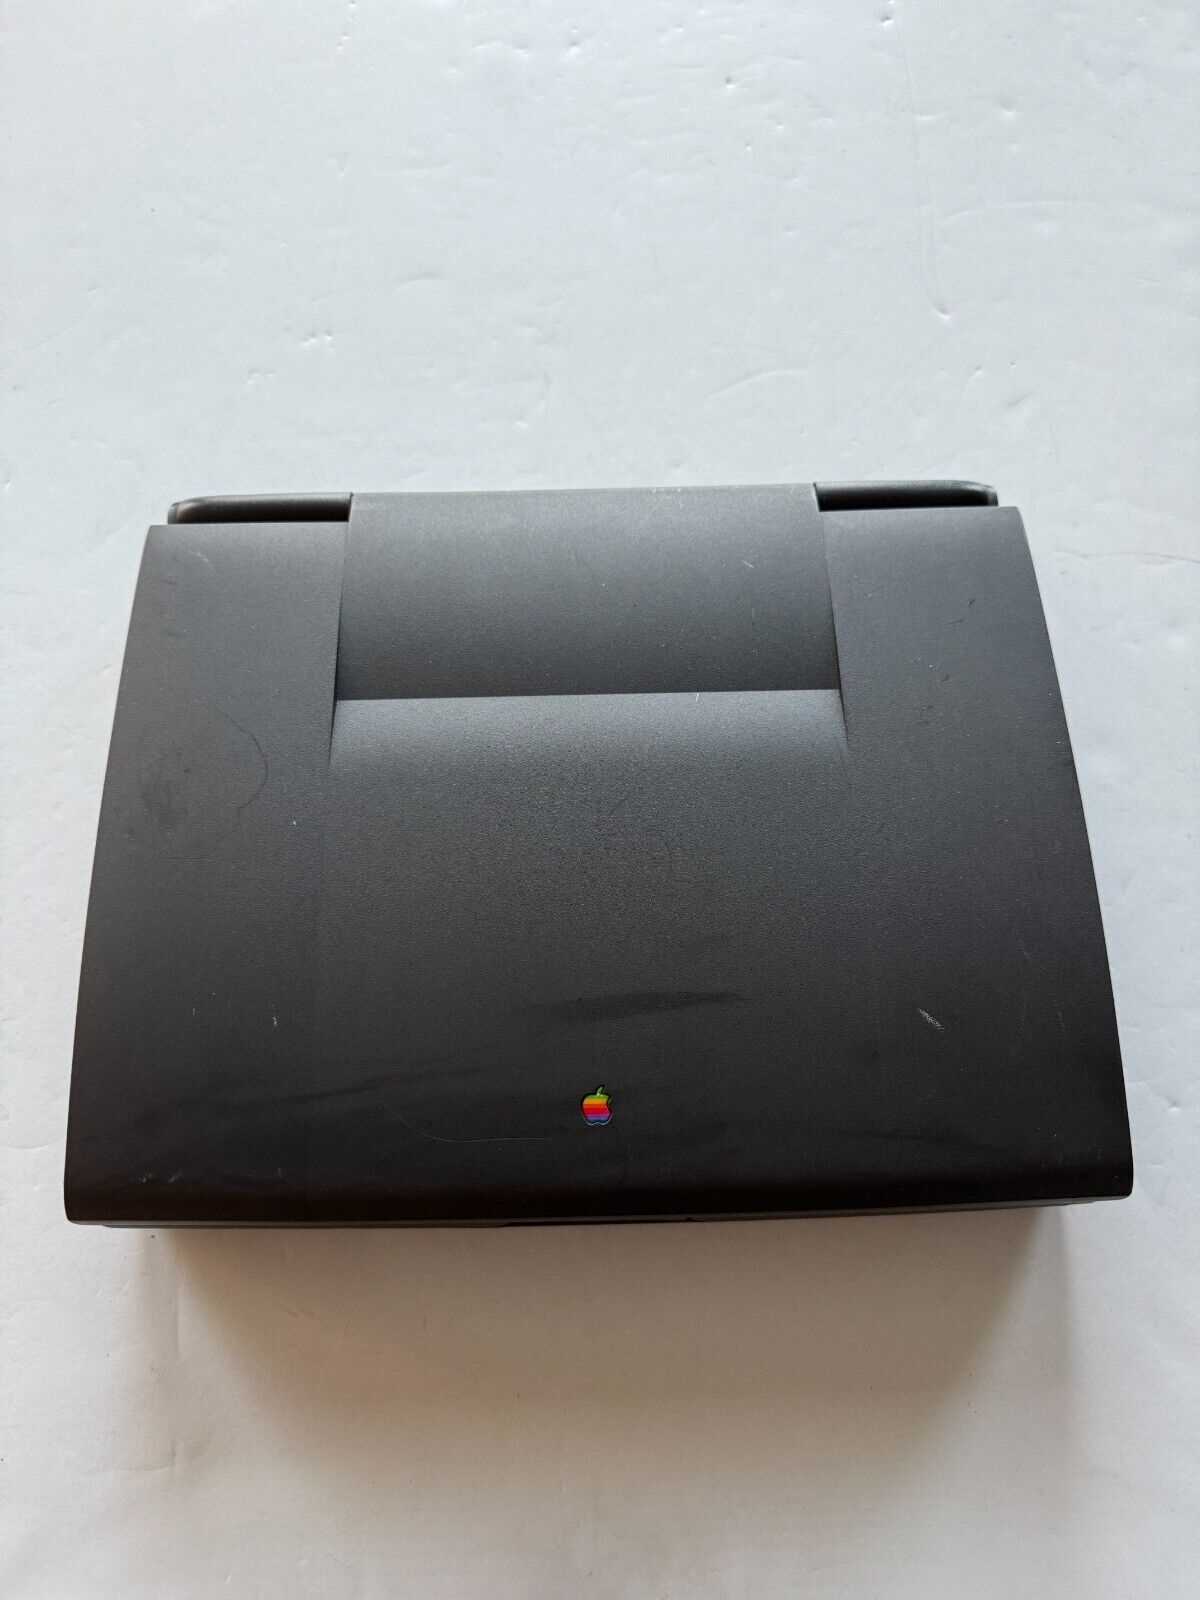 Vintage Apple Macintosh PowerBook 3400c Laptop with CD-ROM